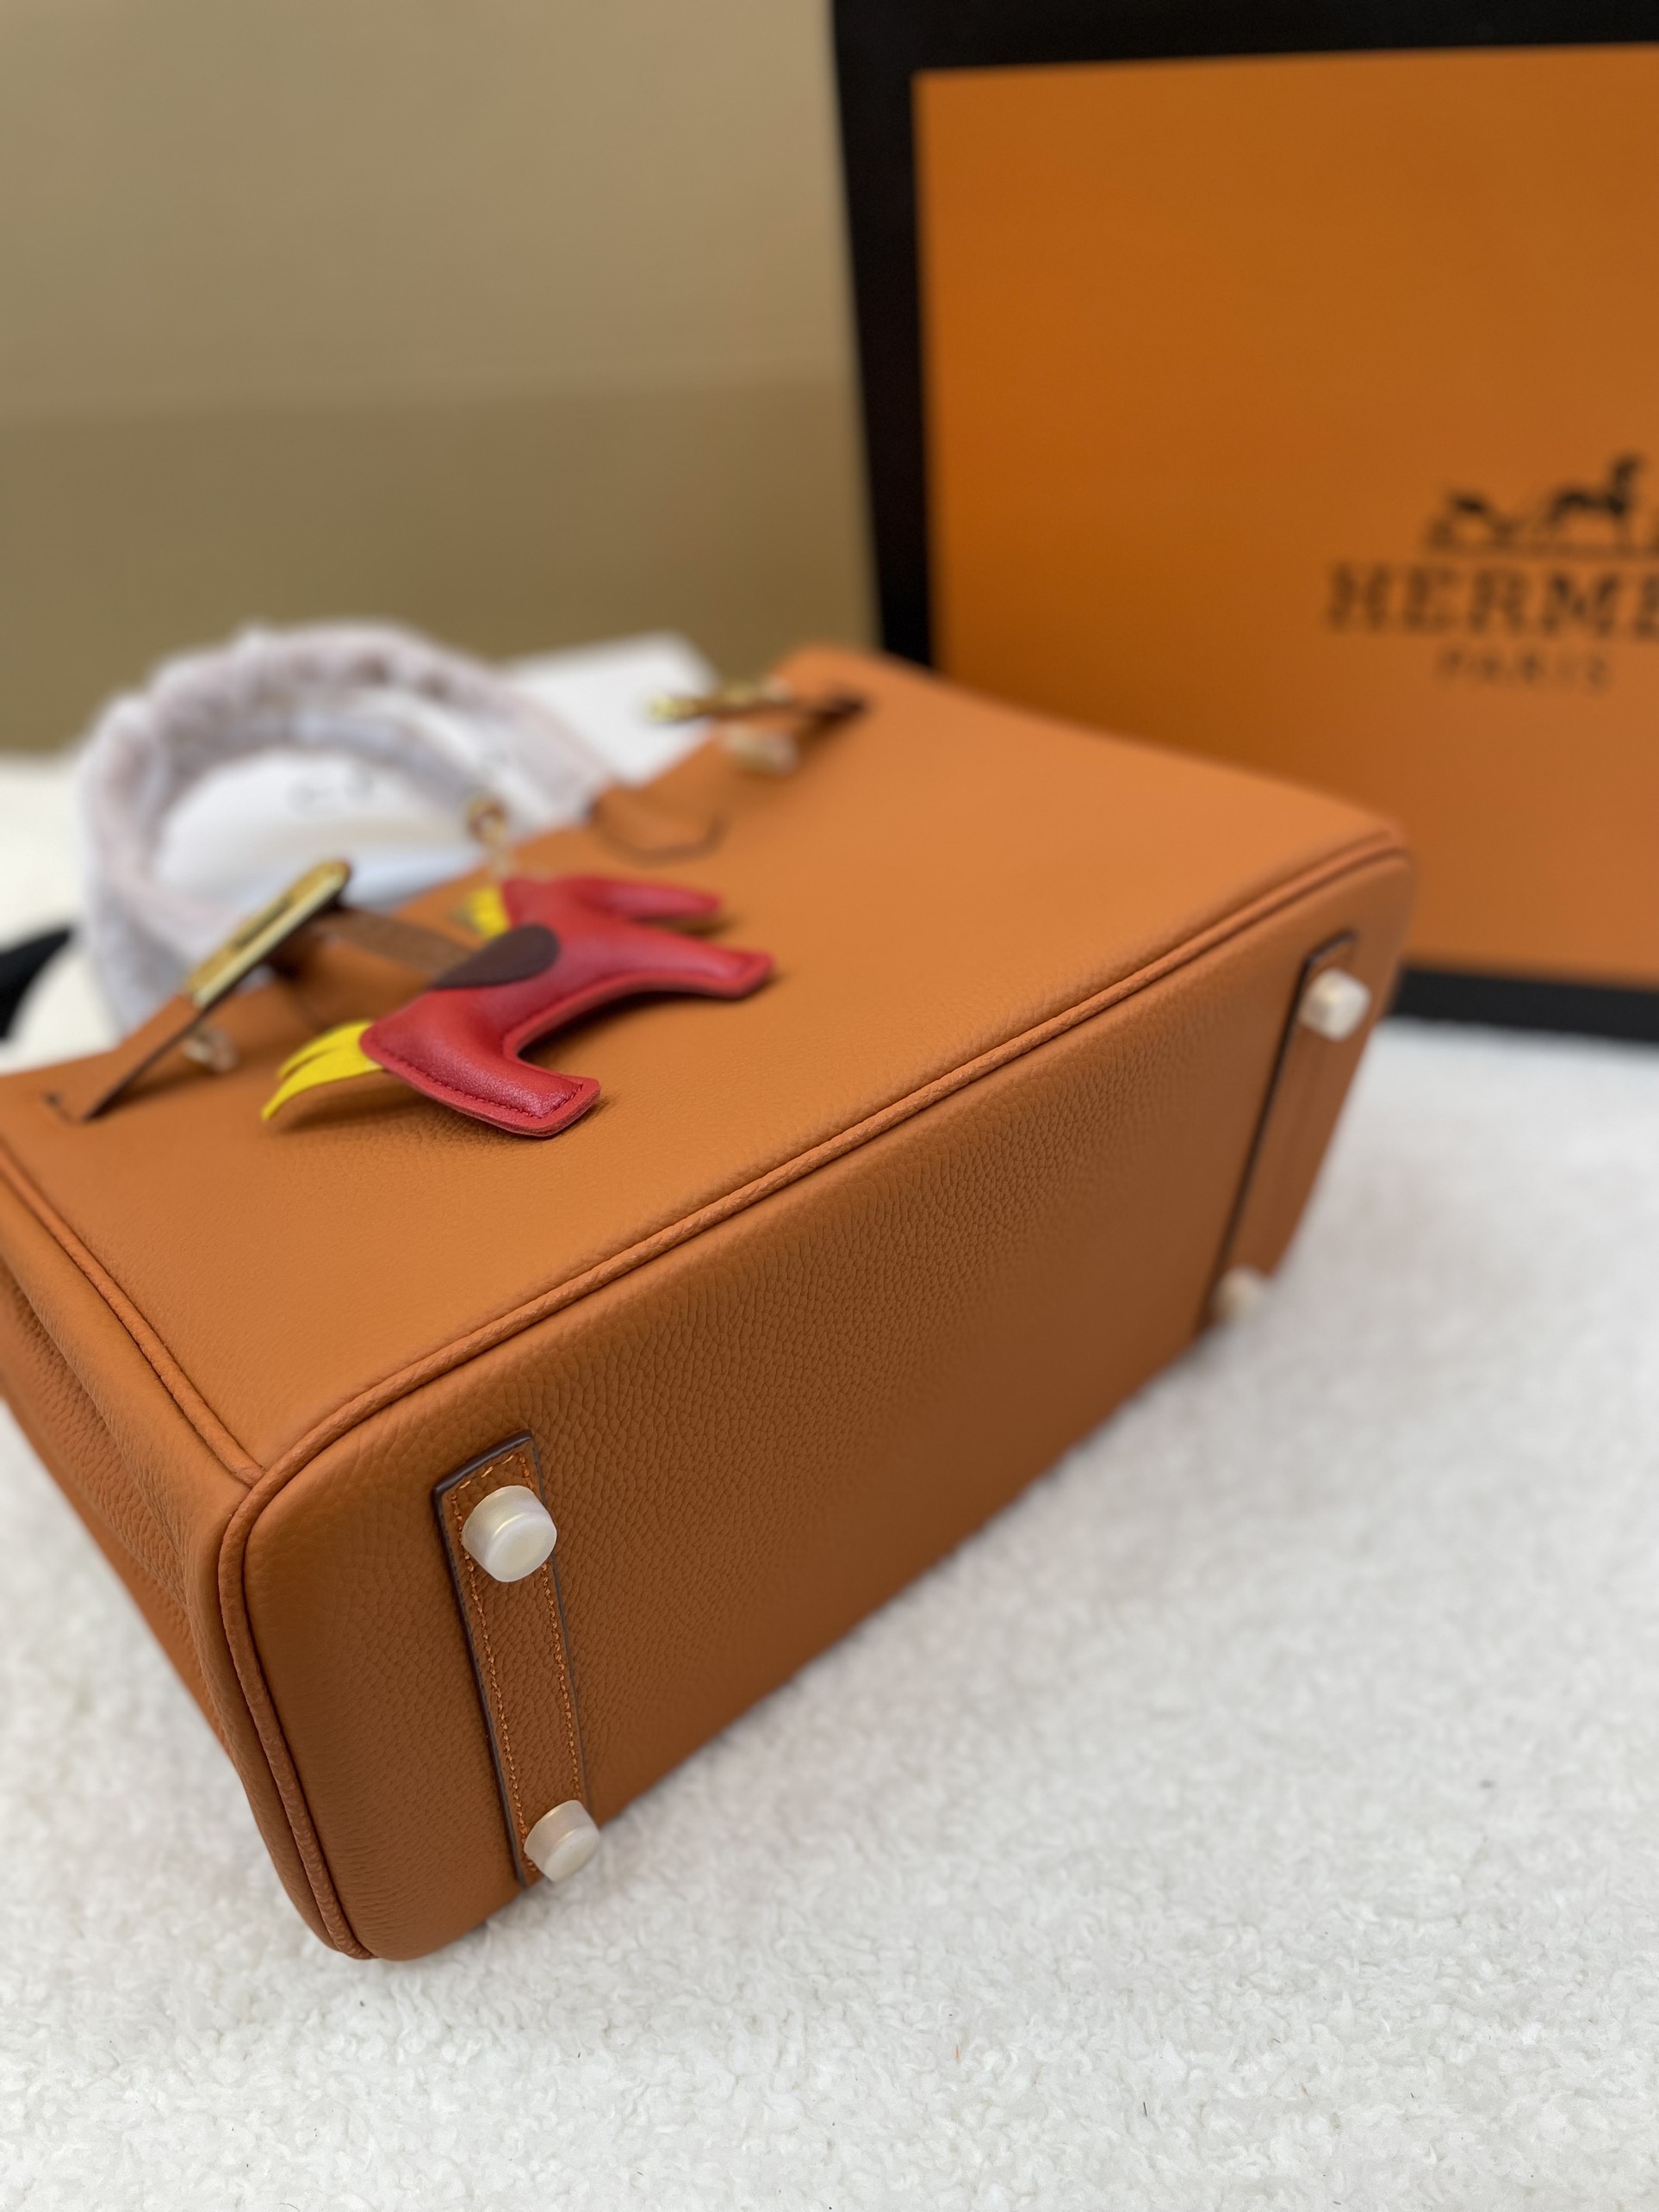 Túi Xách Hermes Birkin Super Màu Cam Size 30cm Full Box